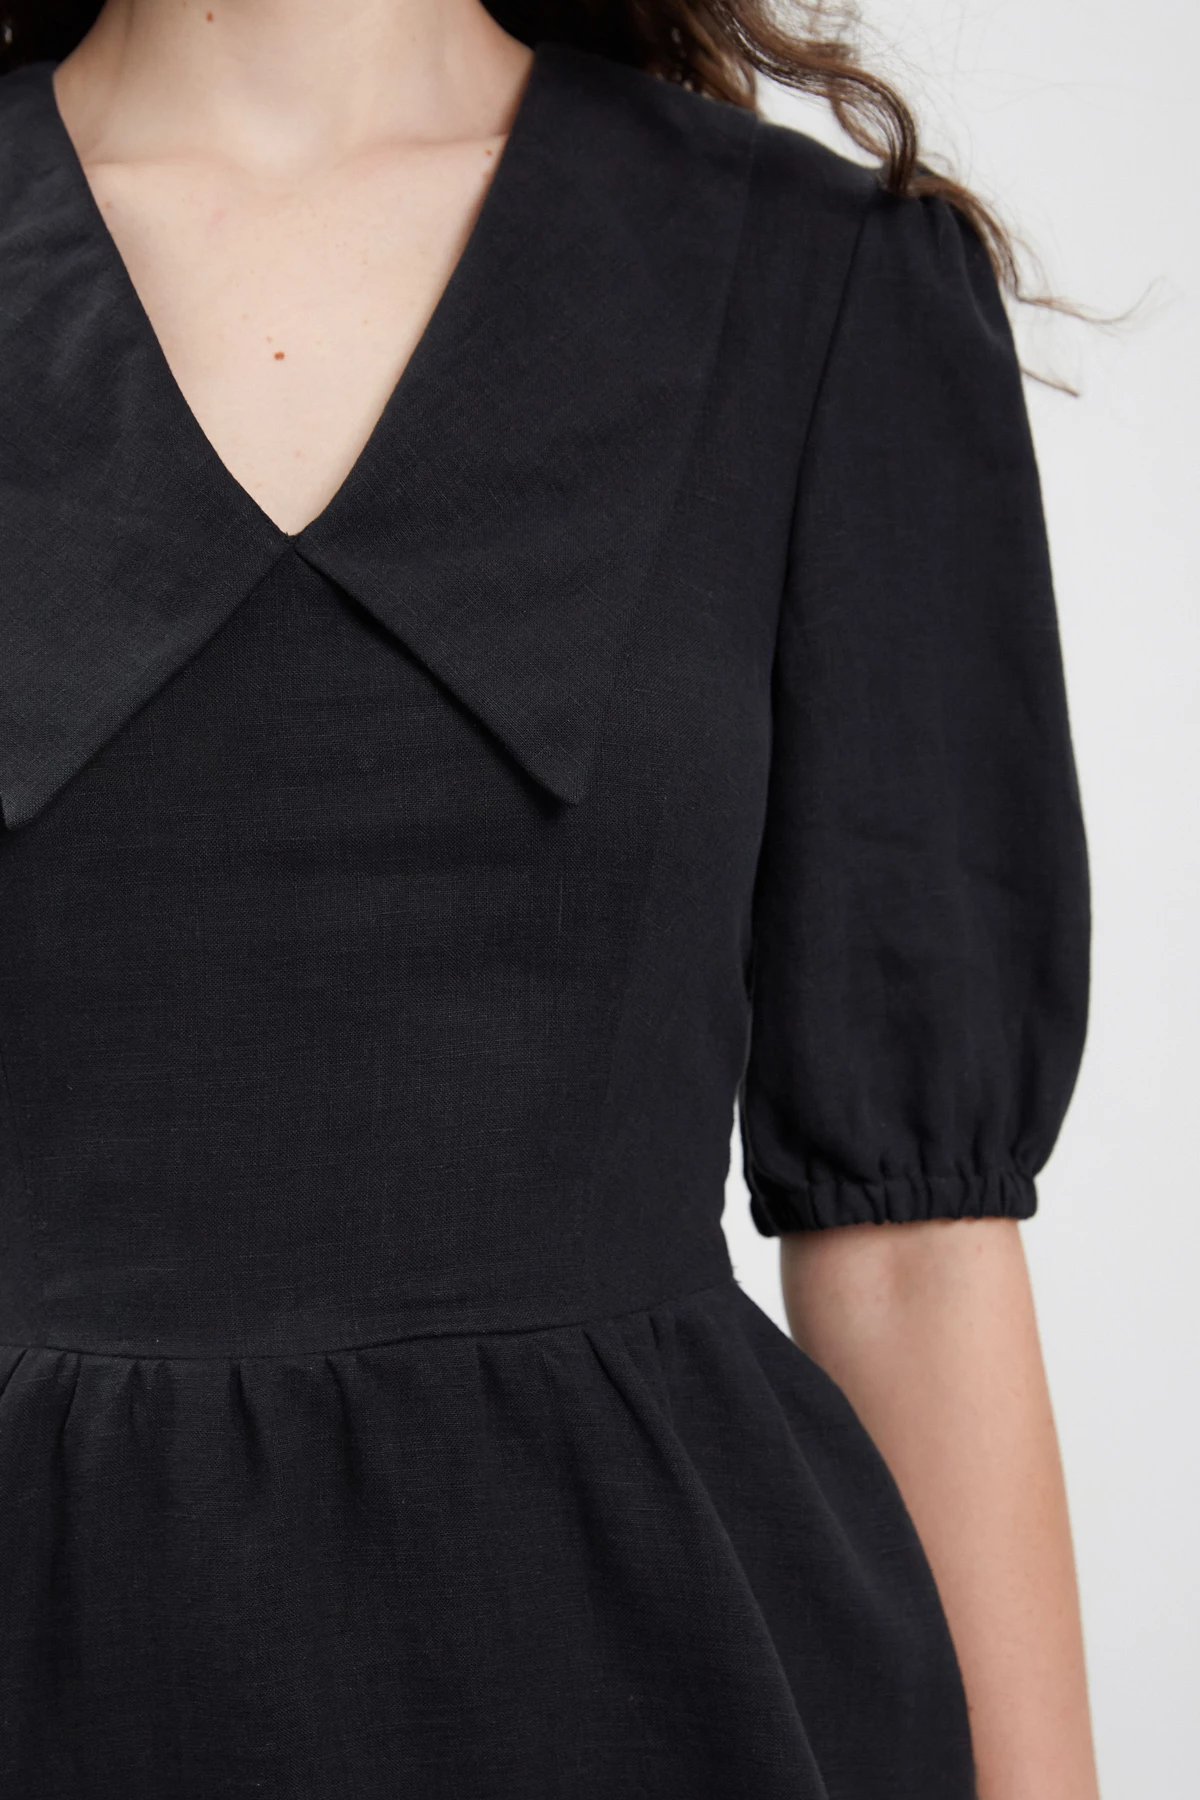 Black short 100% linen dress with collar, photo 6